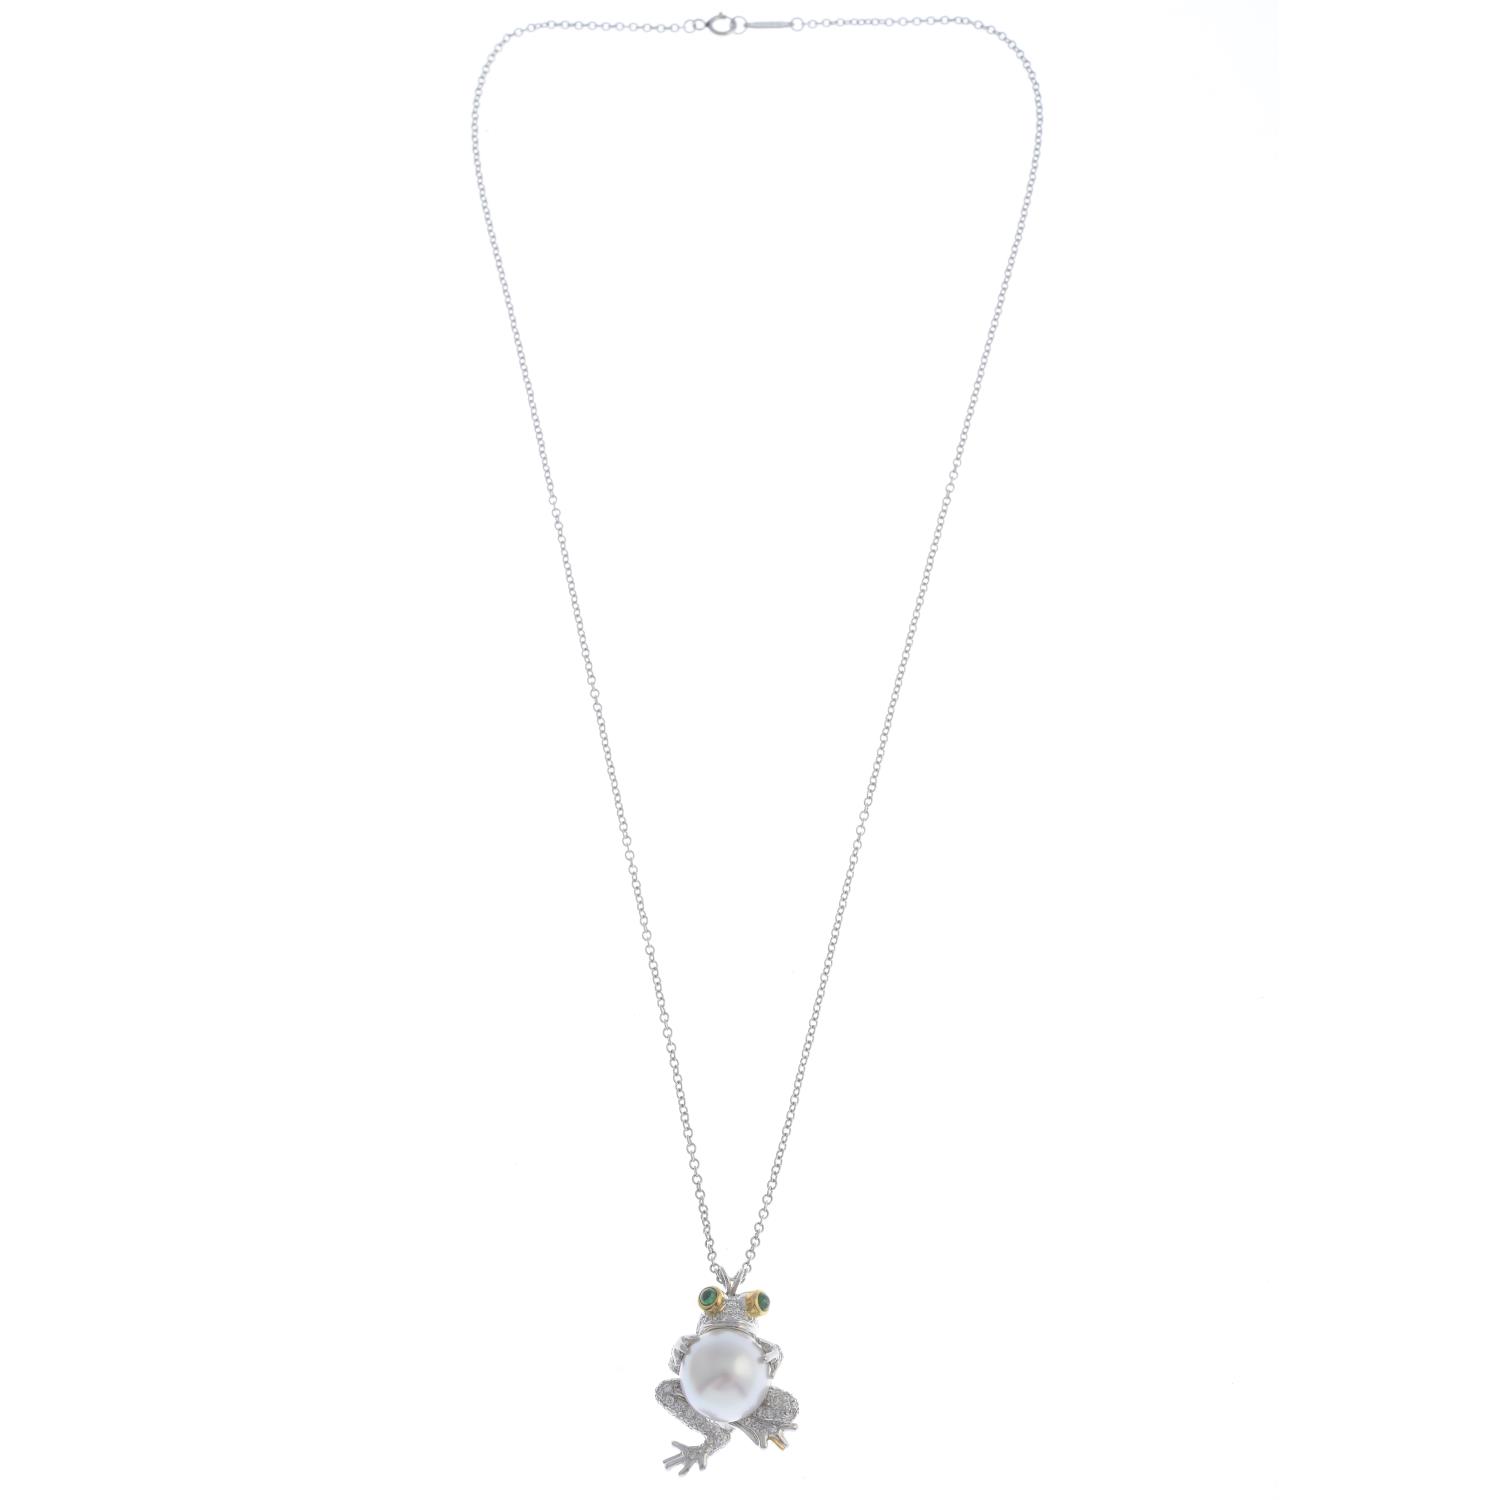 TIFFANY & CO. - a diamond and gem-set pendant. - Image 2 of 3